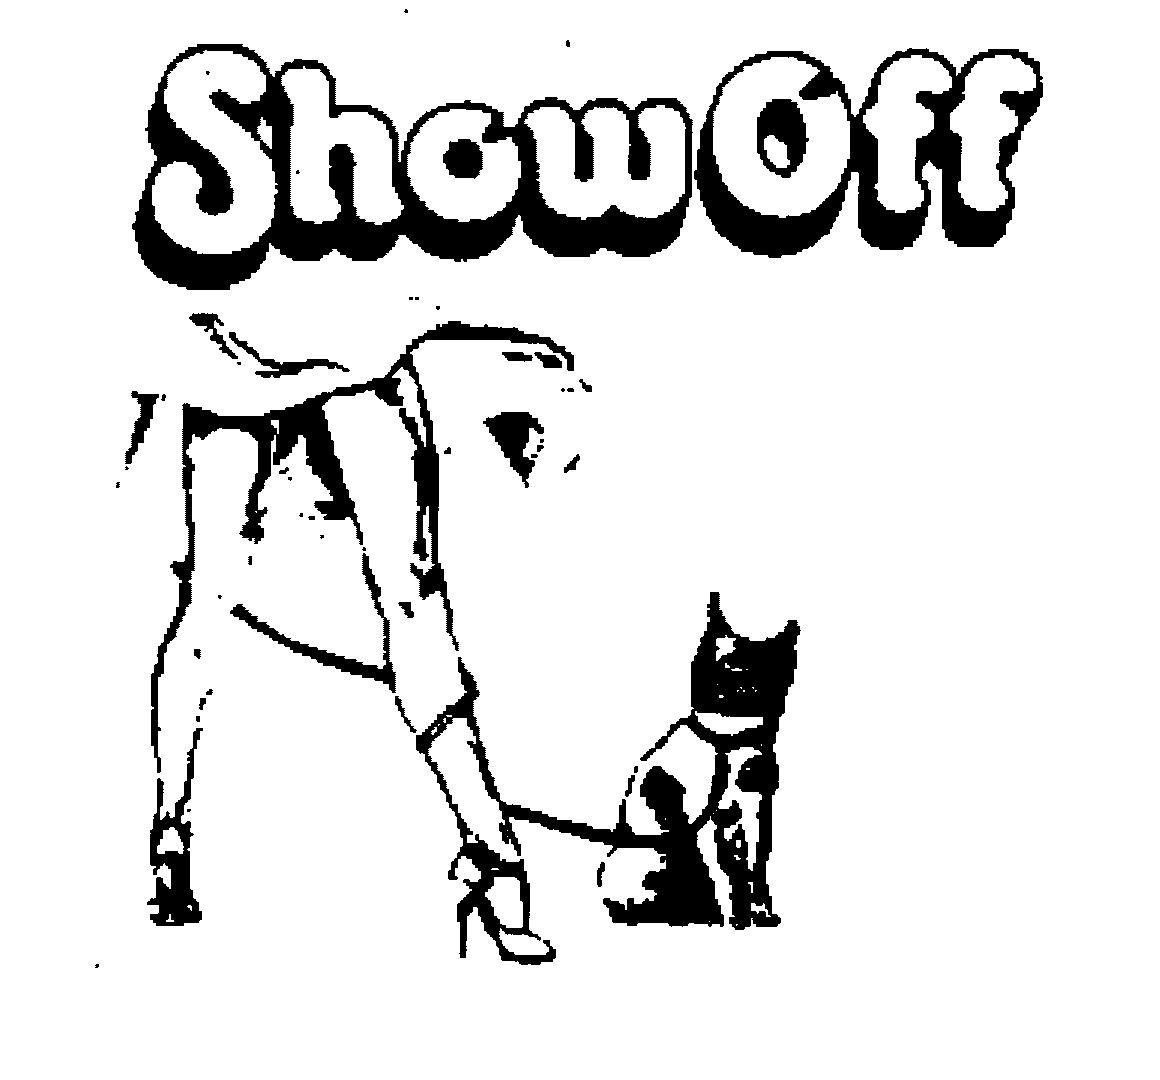 Trademark Logo SHOWOFF